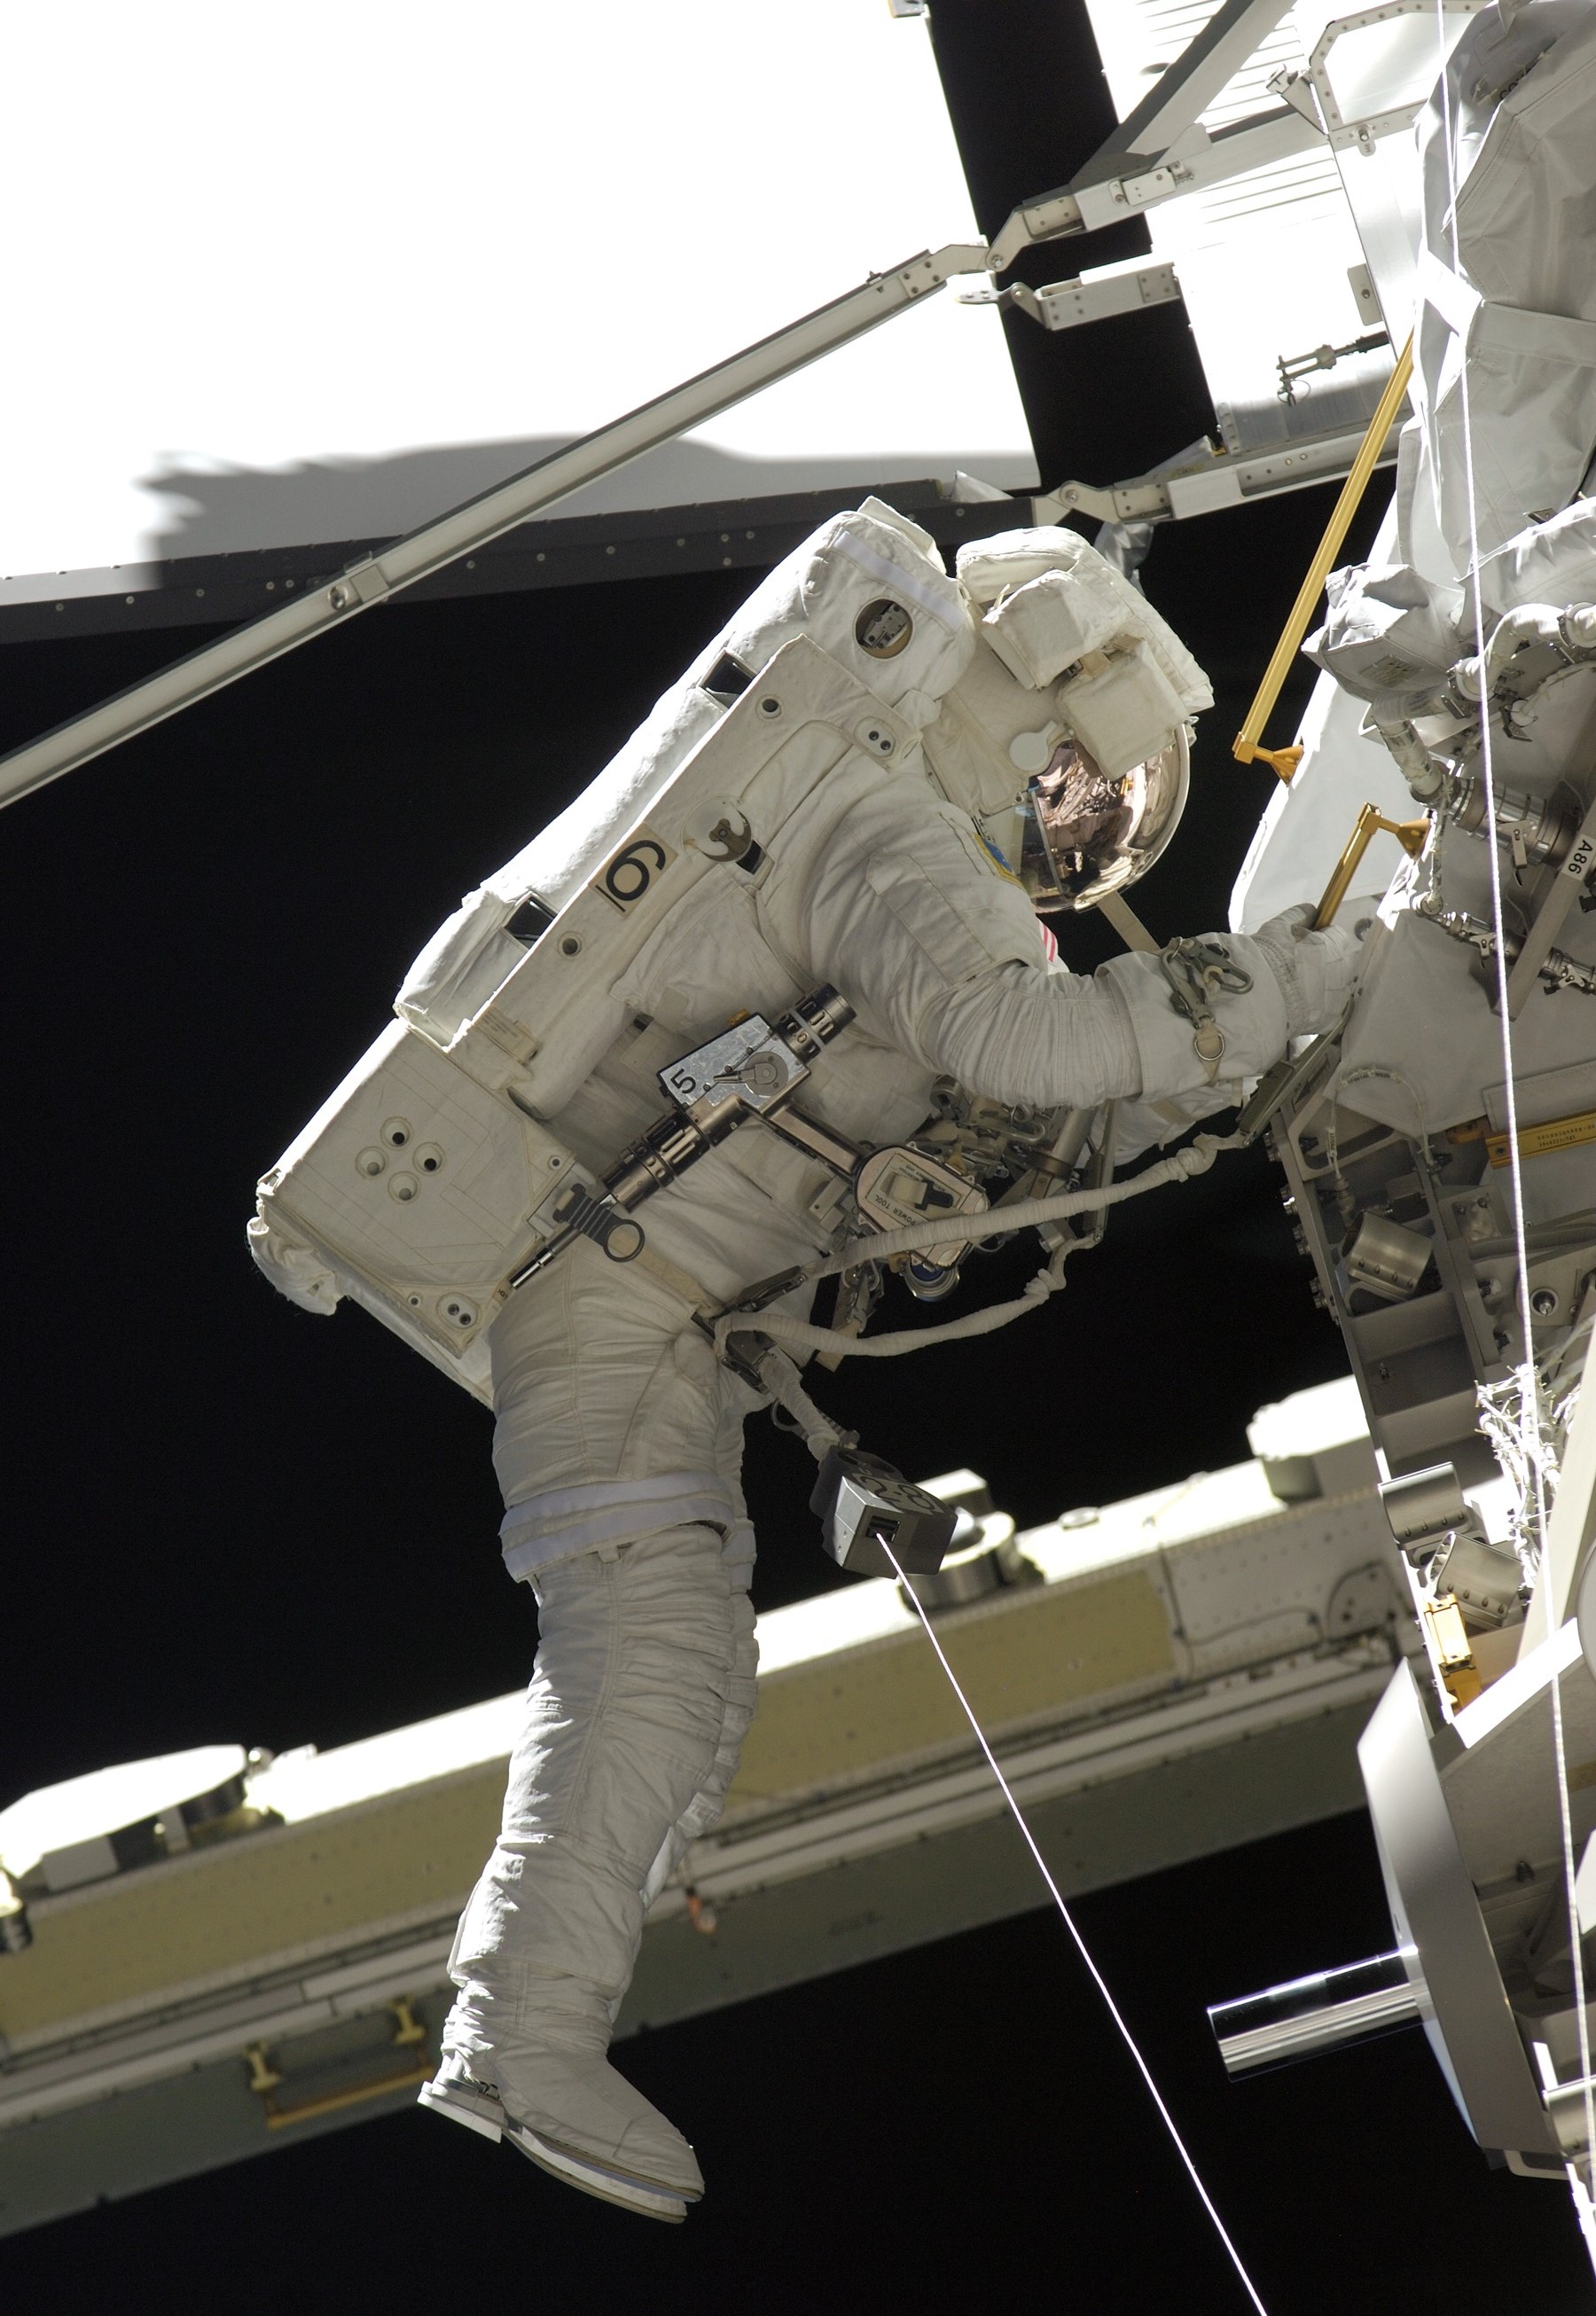 NASA astronaut John D. “Danny” Olivas during an STS-117 spacewalk working on the S3/S4 truss installation.